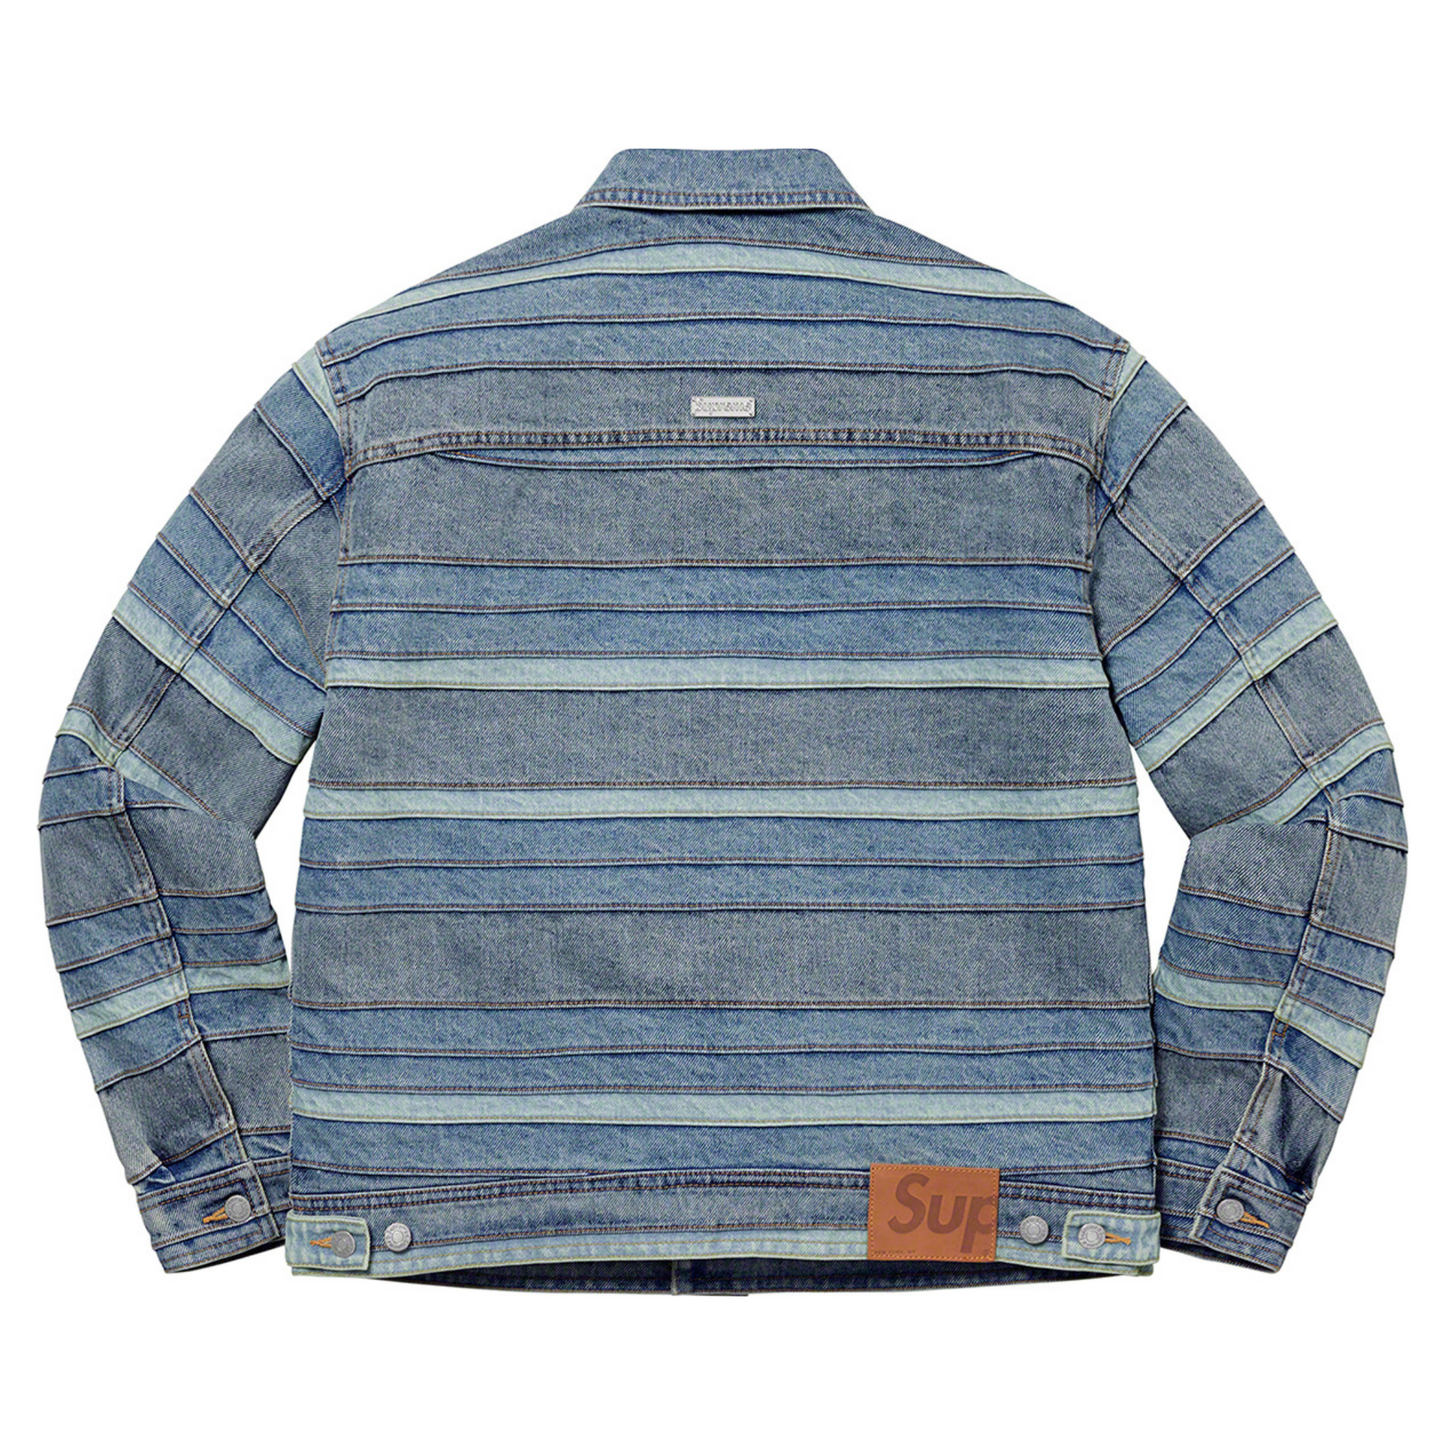 Kool Kiy Supreme Men's Layered Denim Trucker Jacket Blue / As